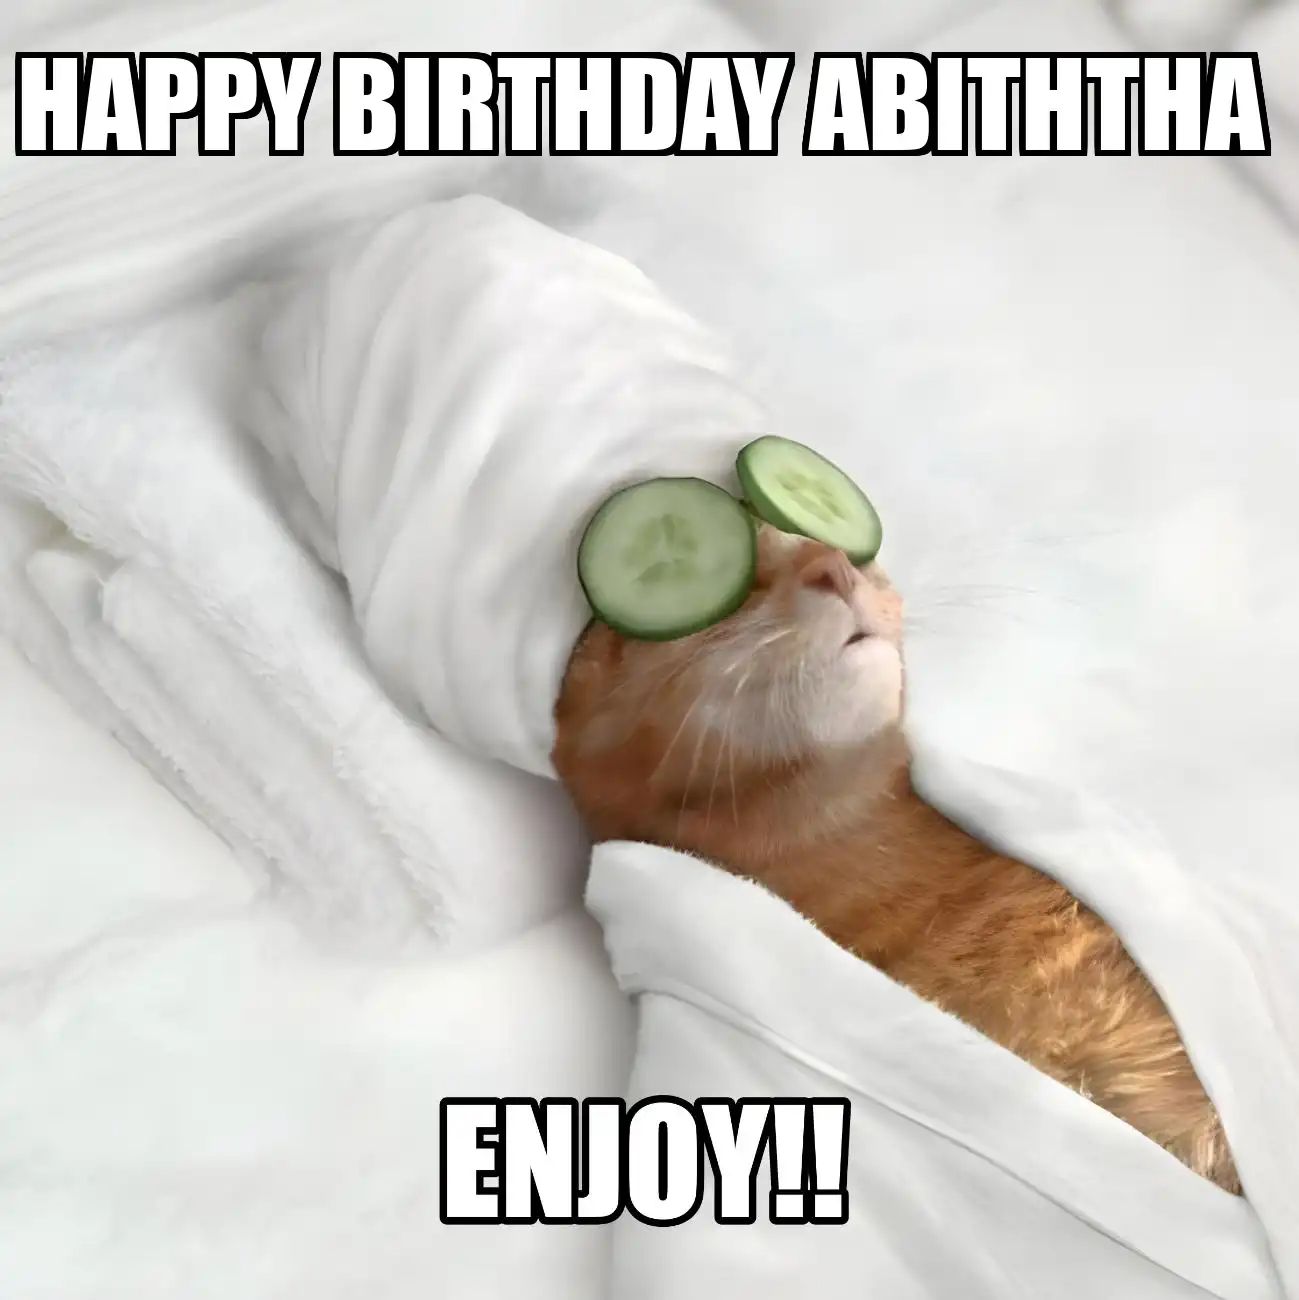 Happy Birthday Abiththa Enjoy Cat Meme